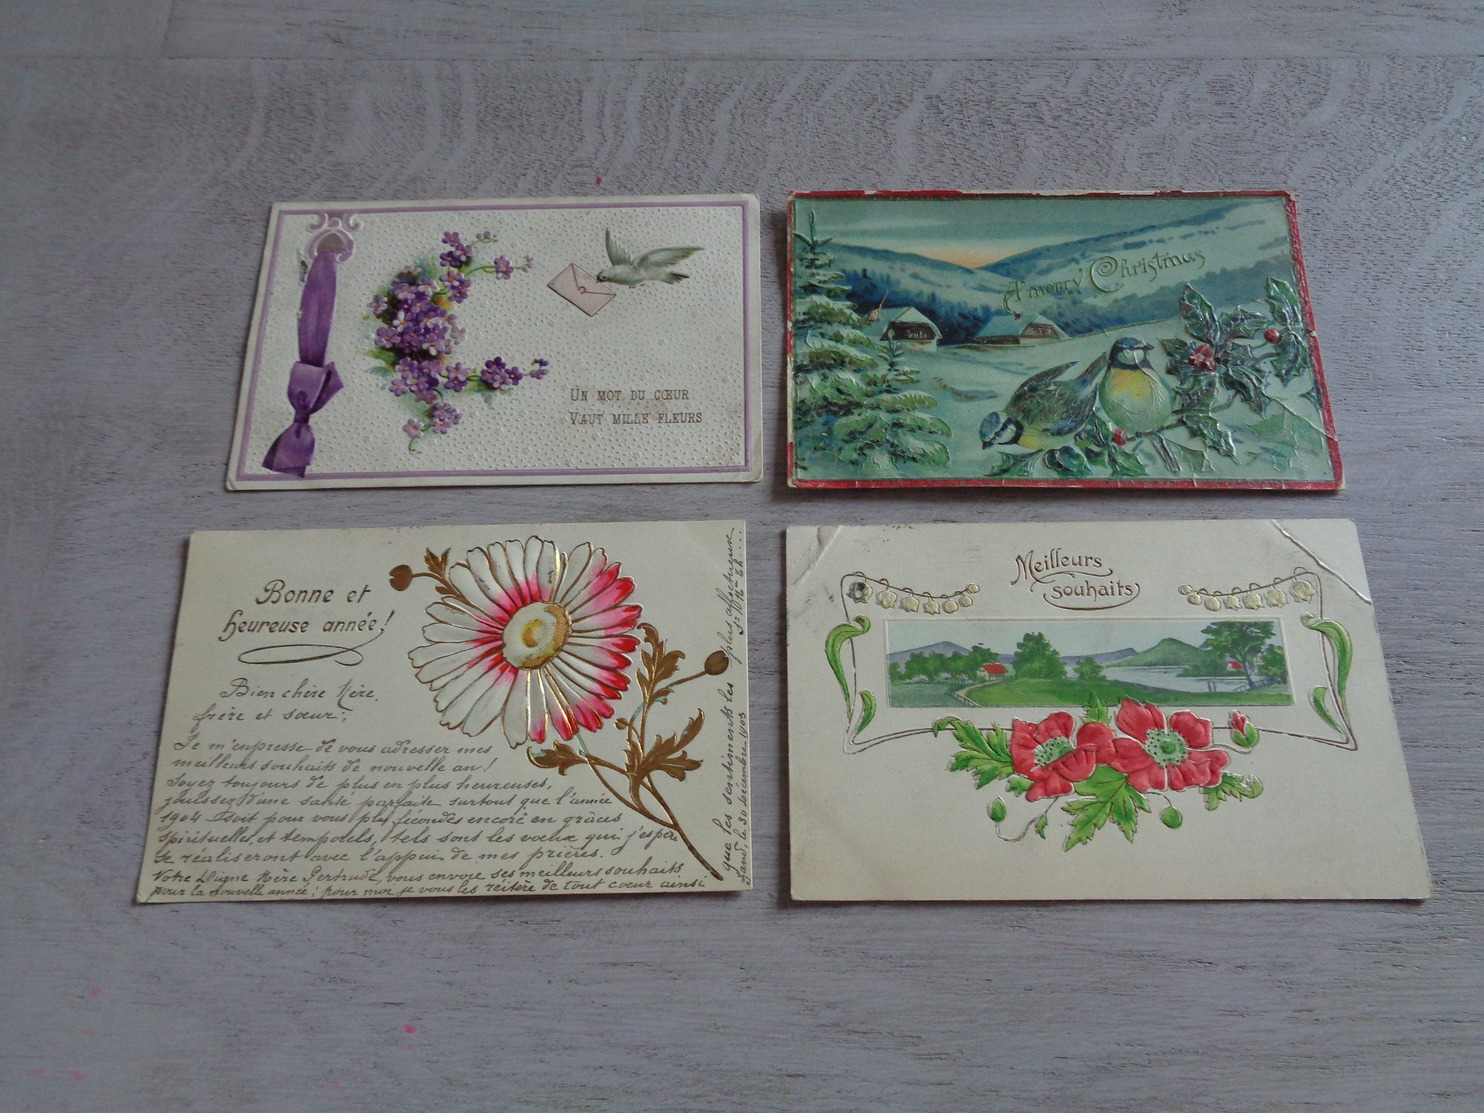 Beau lot de 60 cartes postales de fantaisie gaufrées  gaufrée       Mooi lot van 60 postkaarten van fantasie reliëf